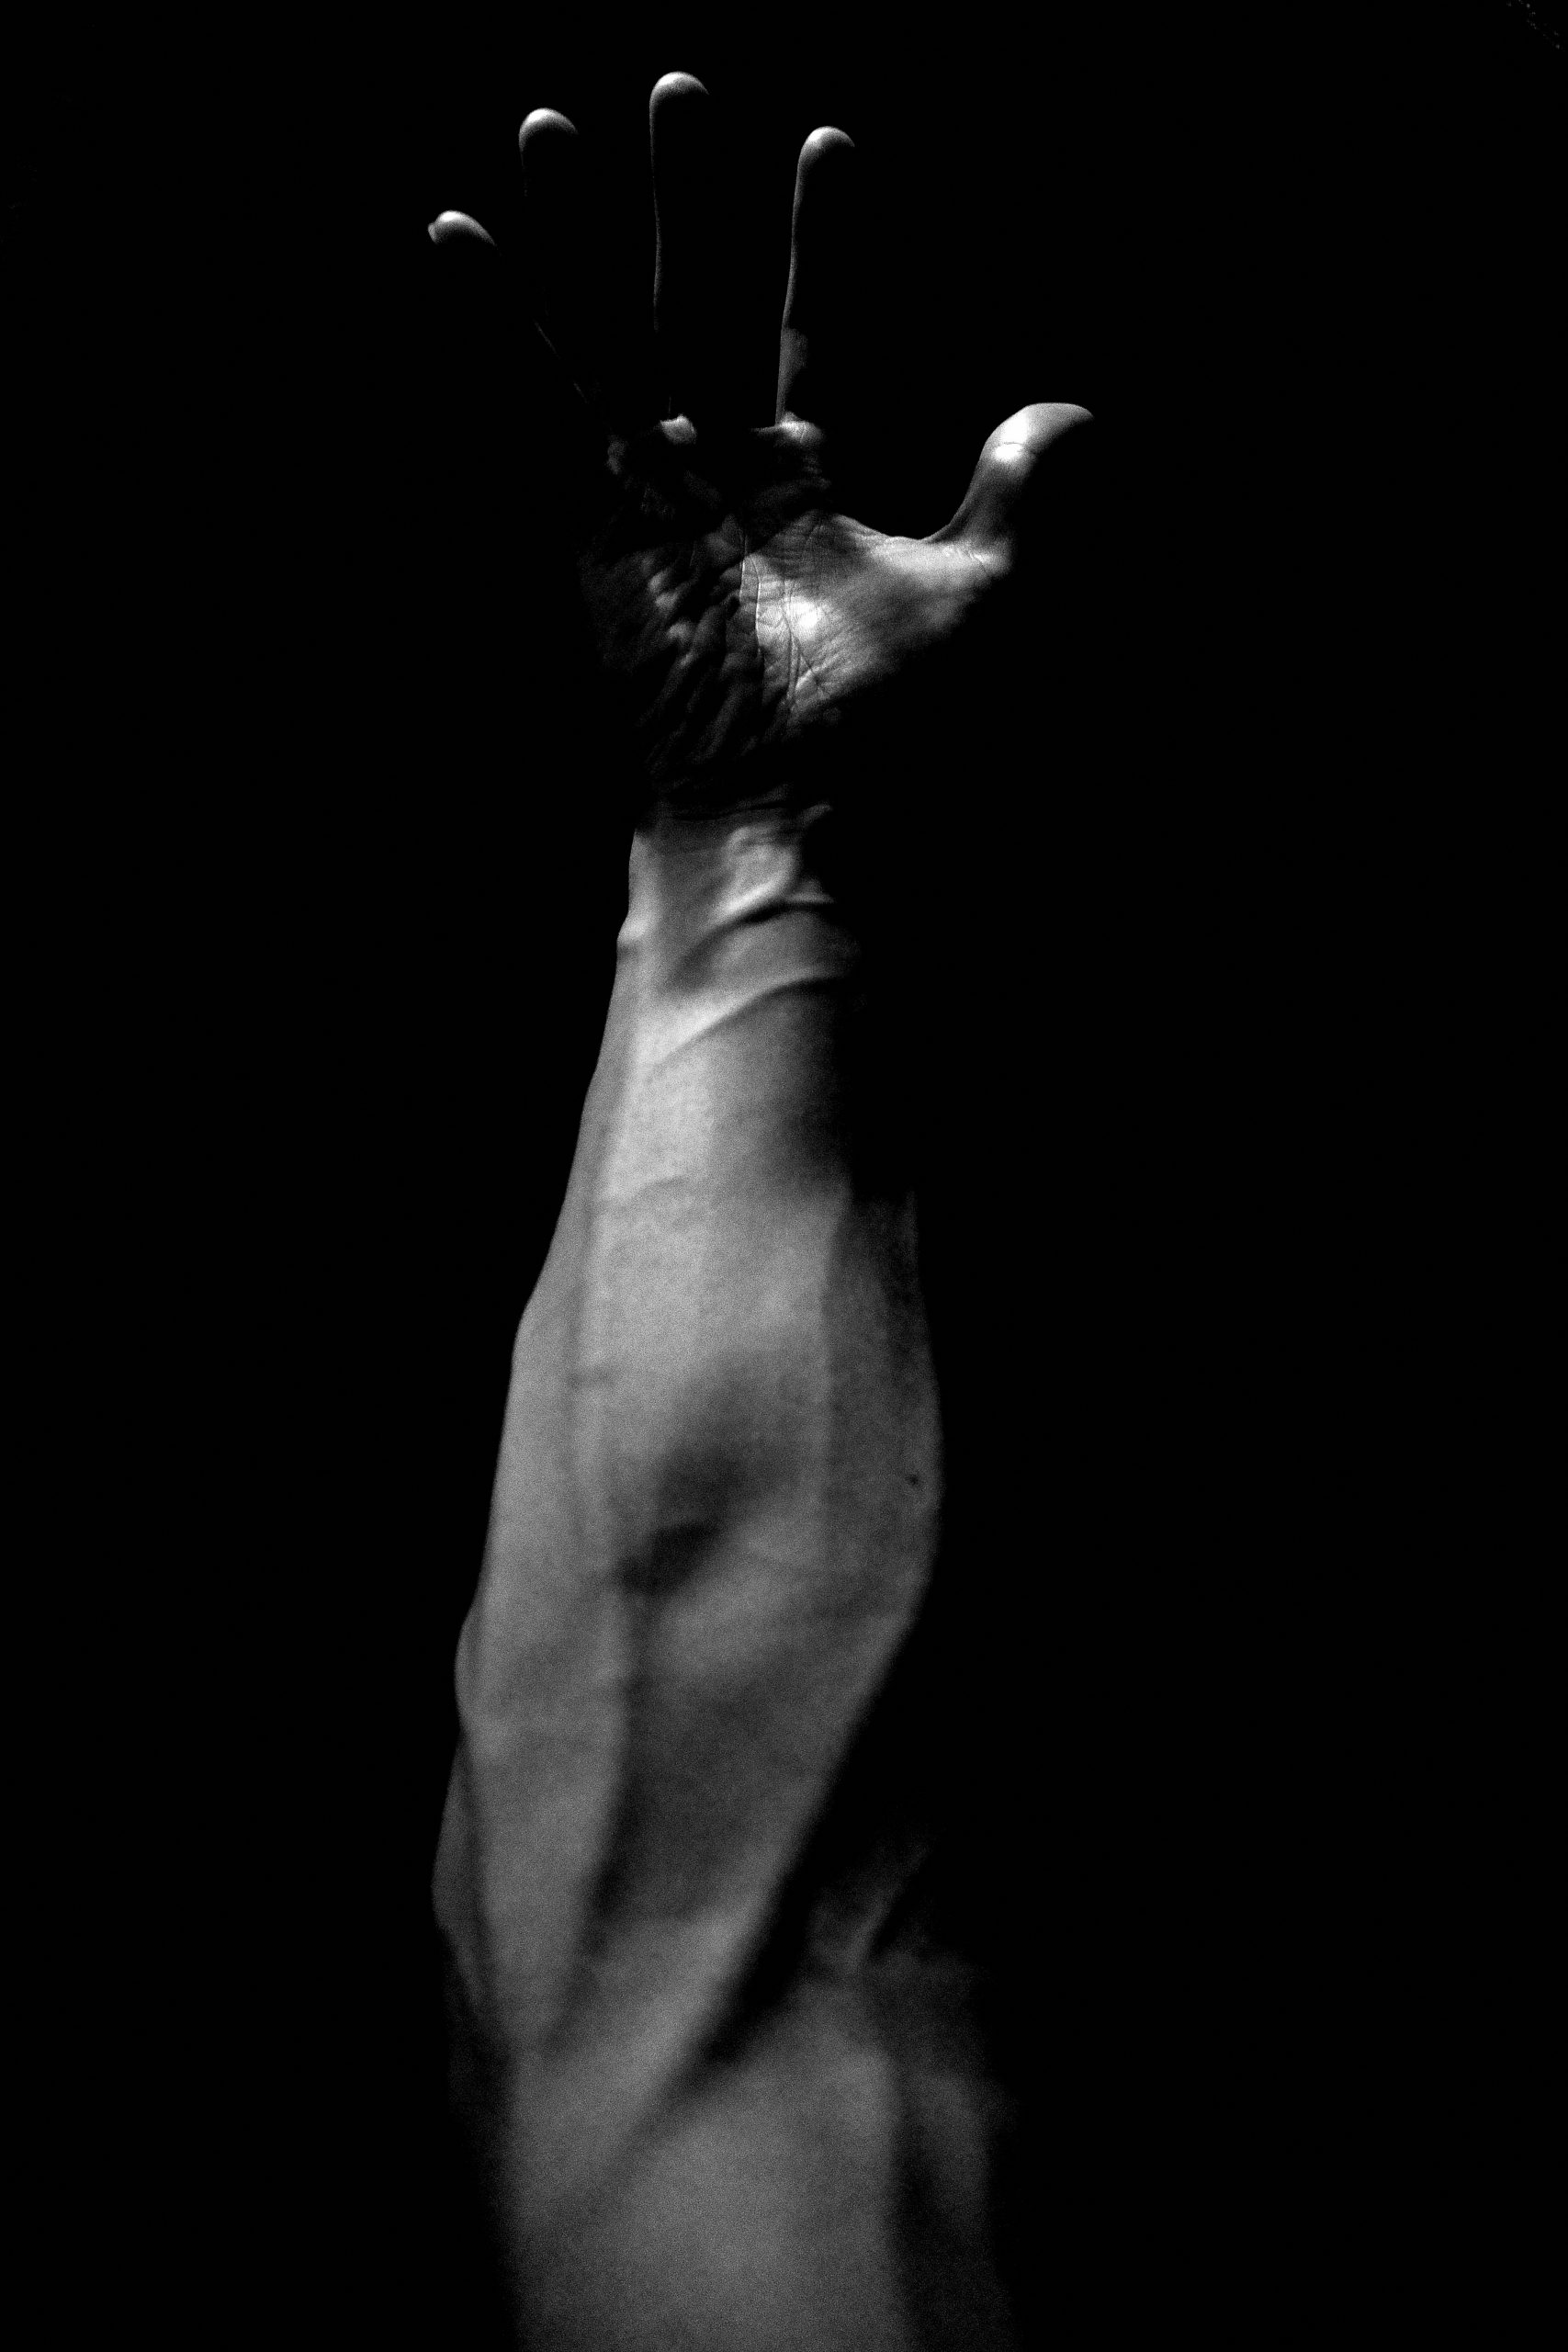 ERIC KIM arm vertical vein black and white photograph